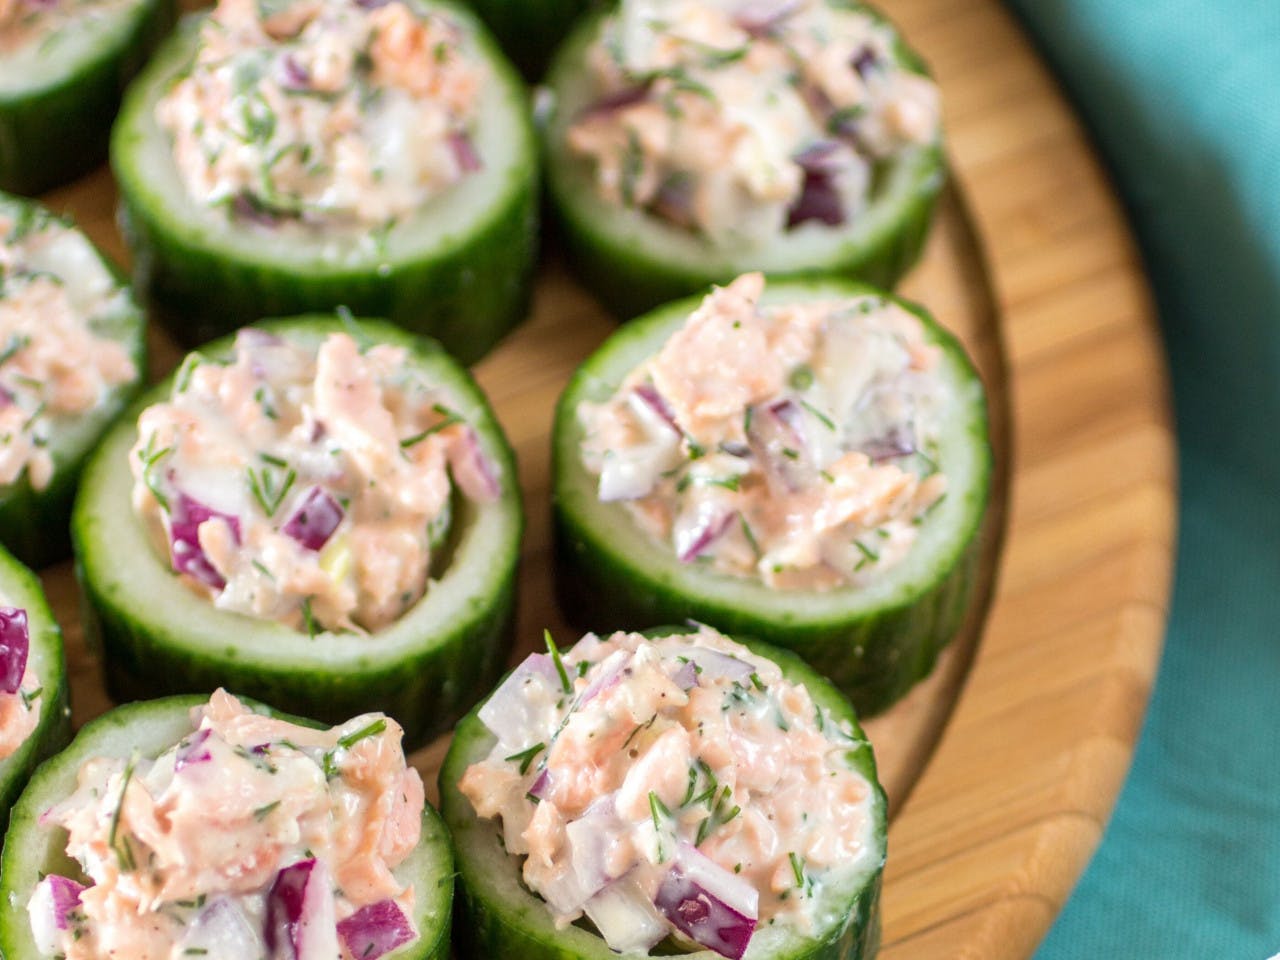 Cucumber bites with salmon salad